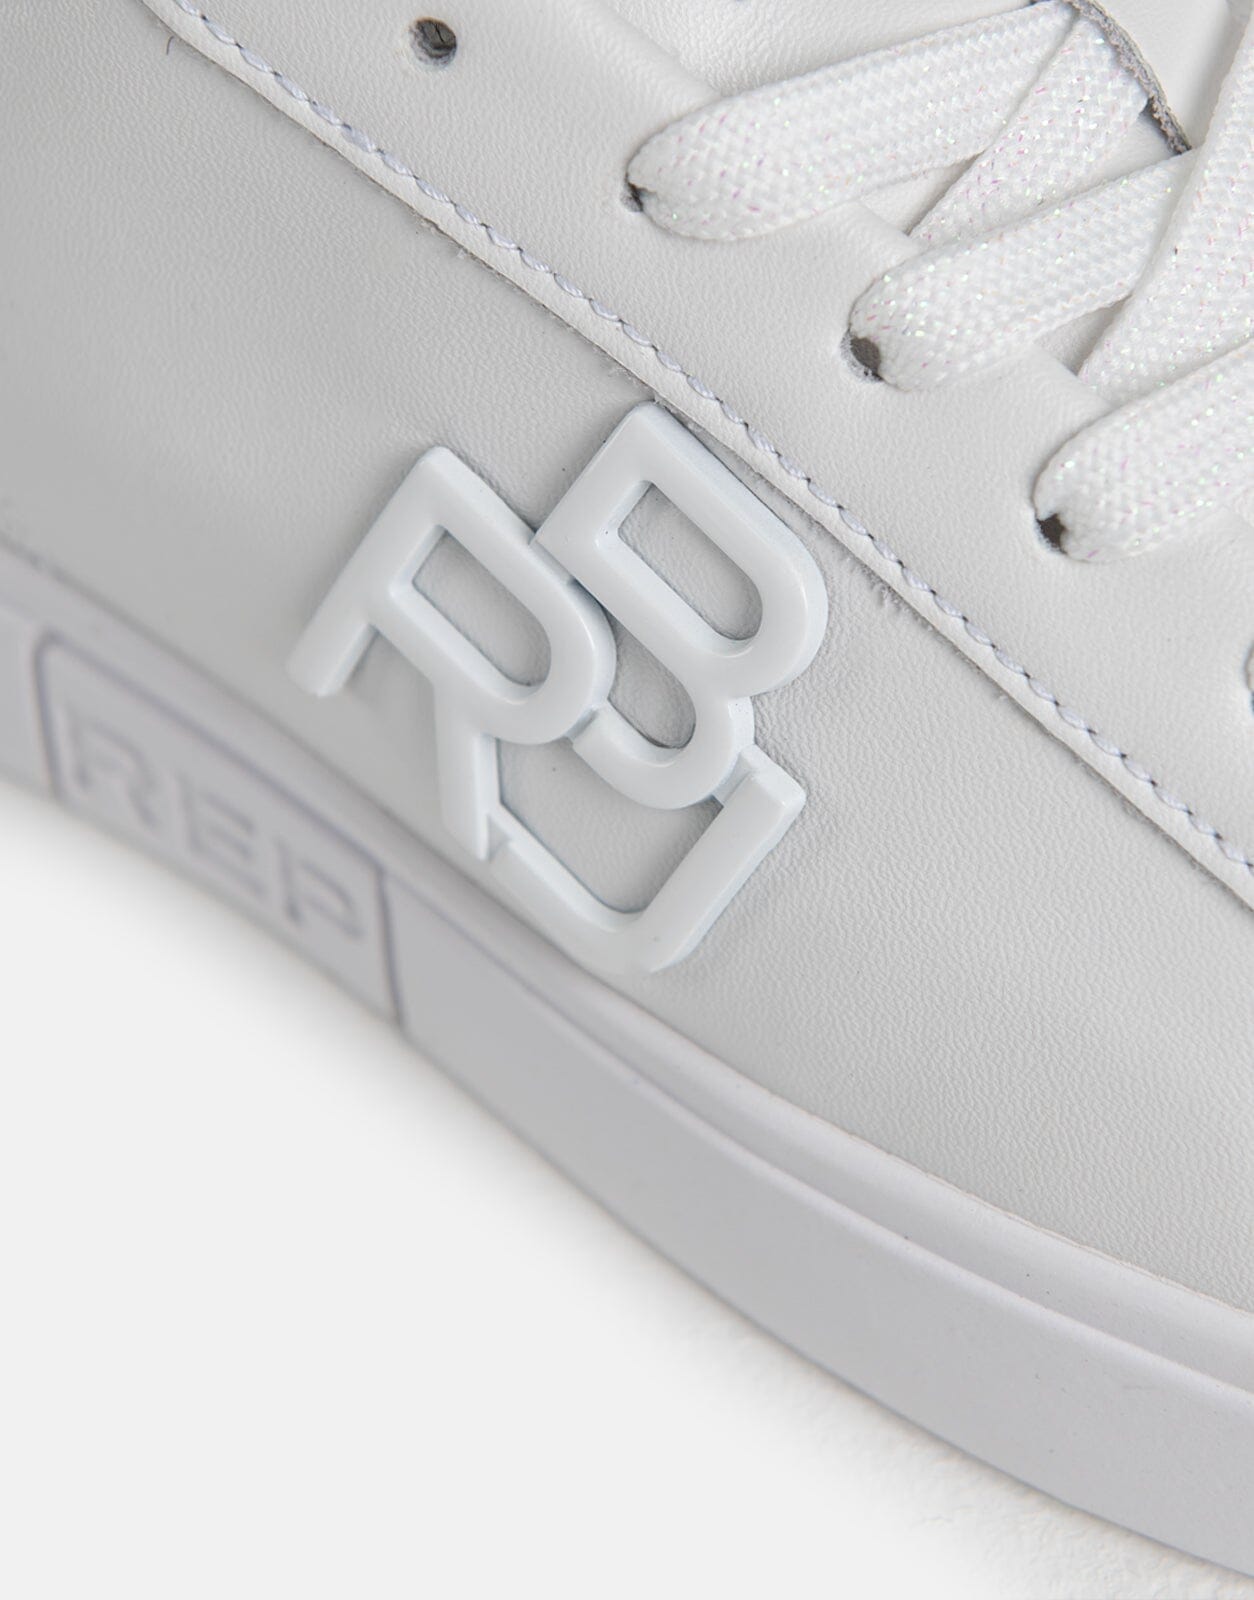 Replay Polys RBJ White Sneakers - Subwear